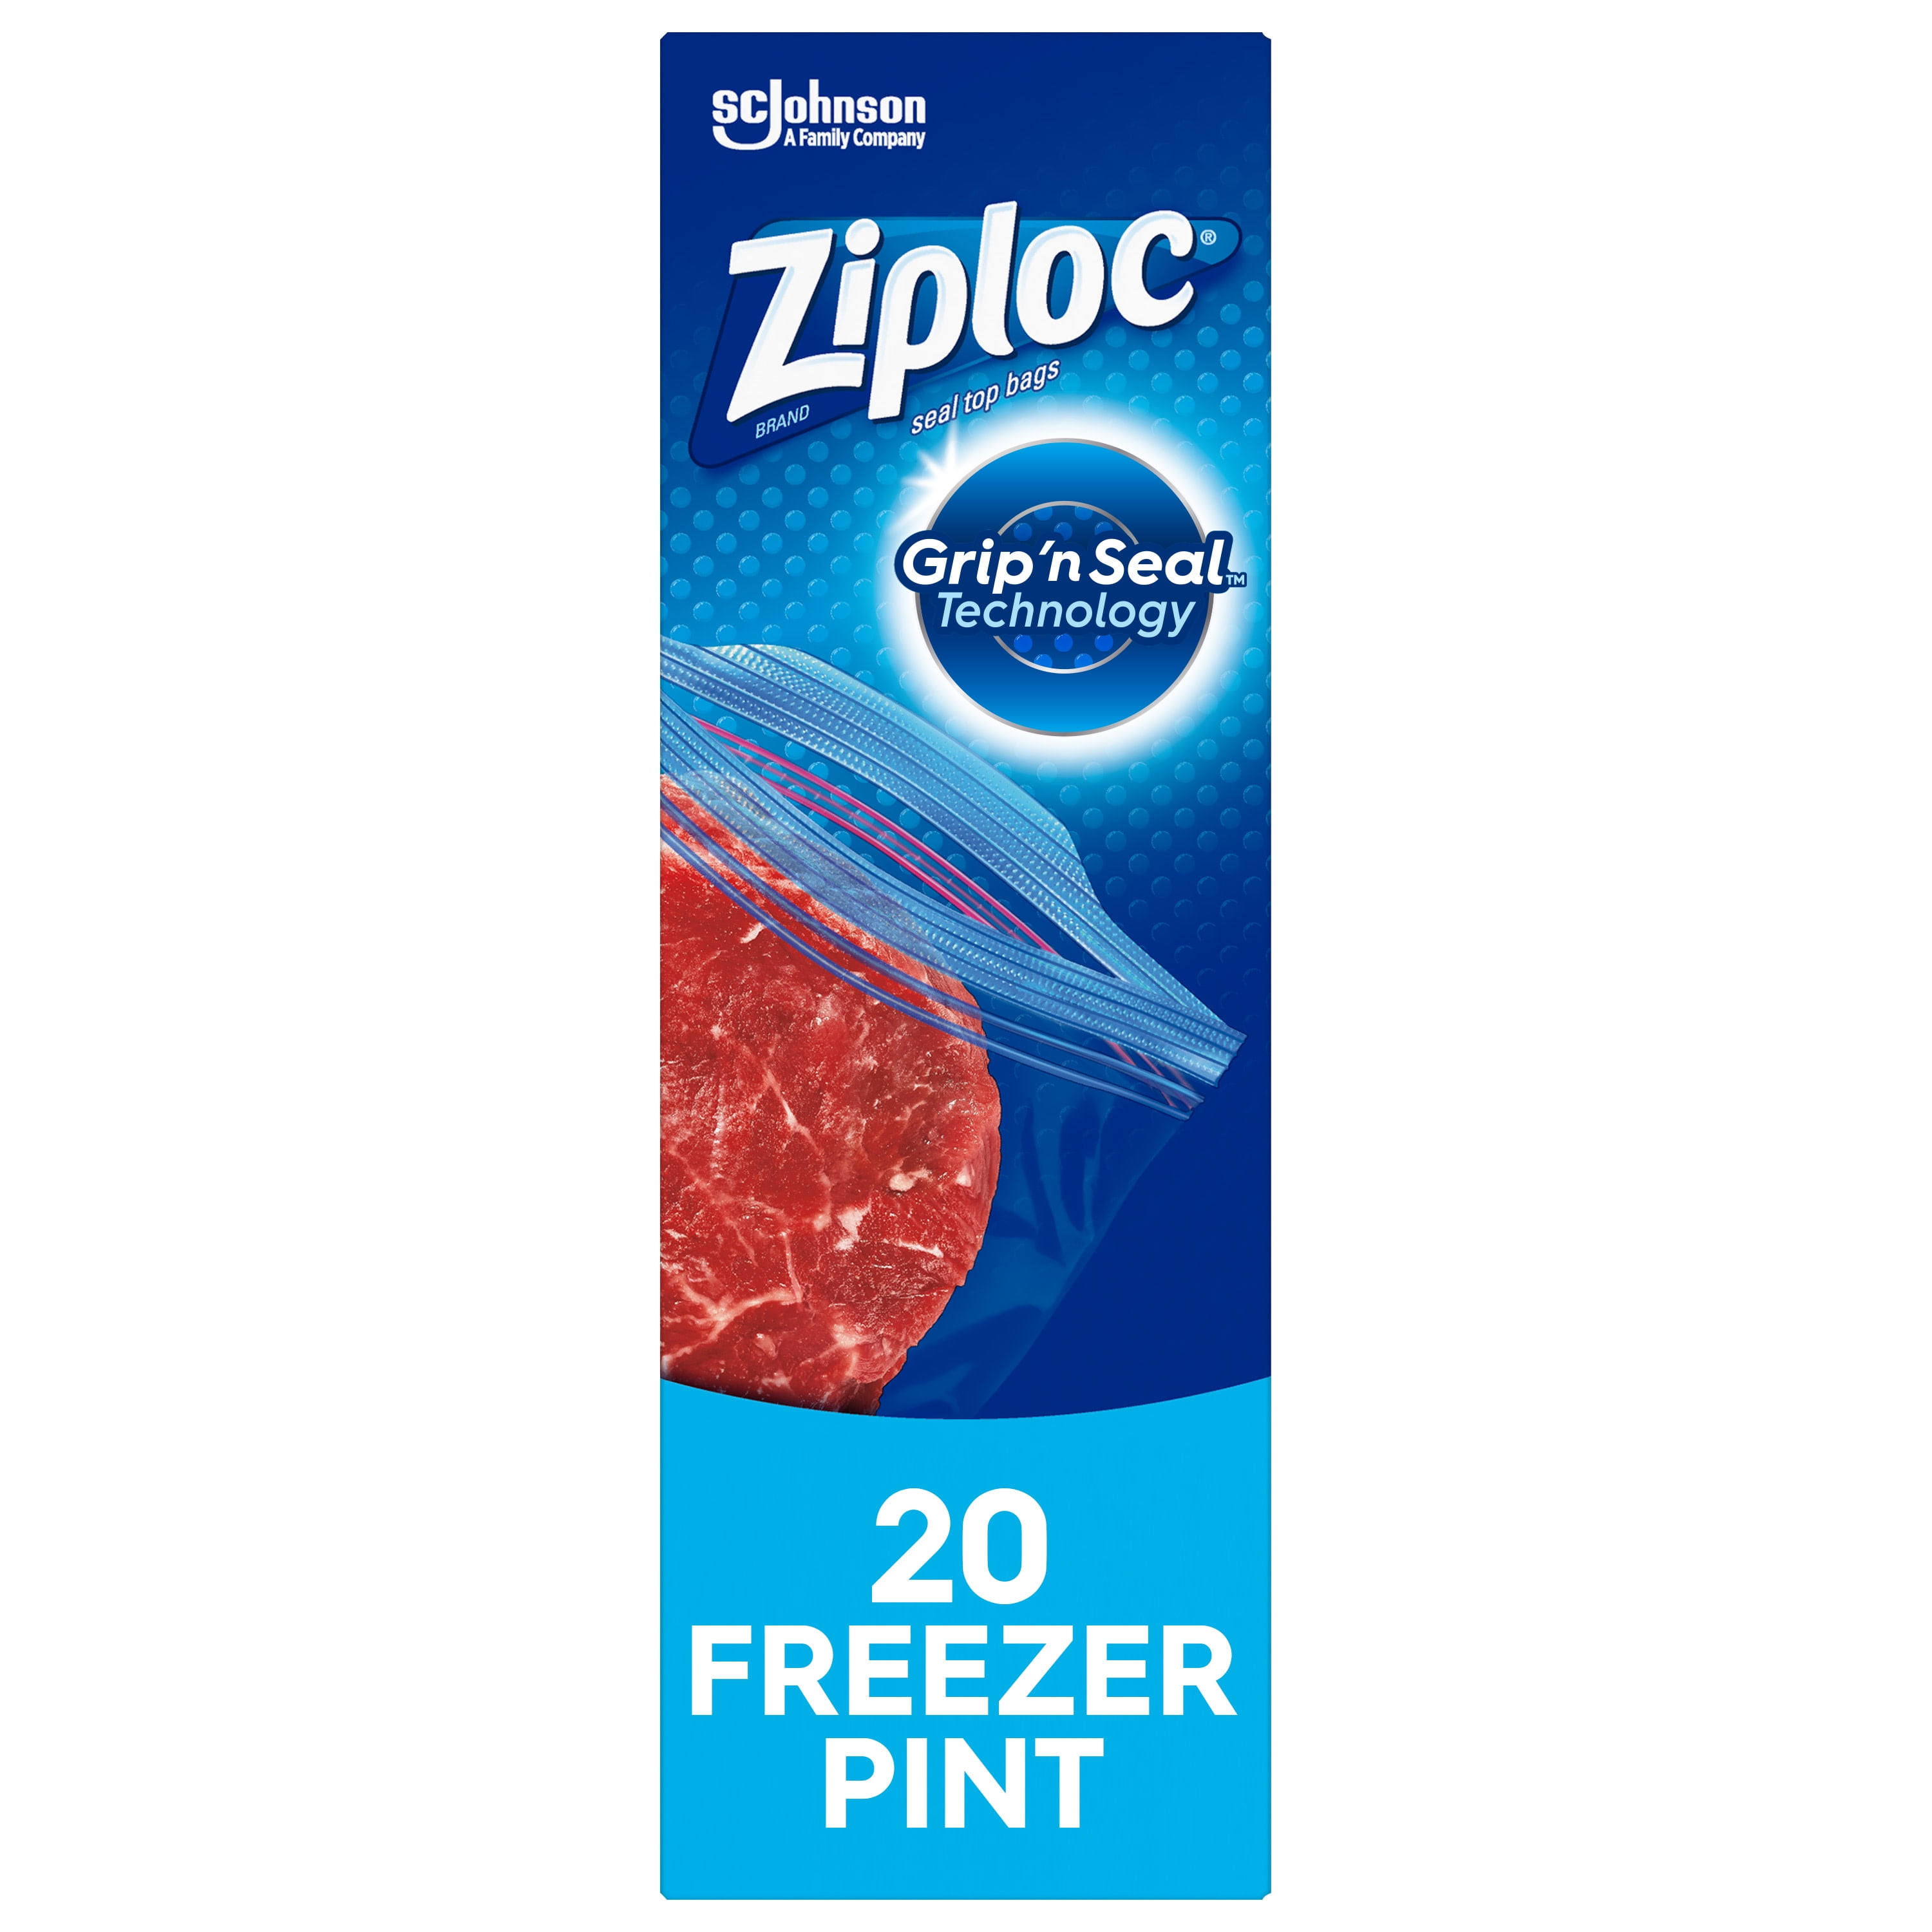 Ziploc Heavy Duty Freezer Bags - Quart (38-ct)-13560